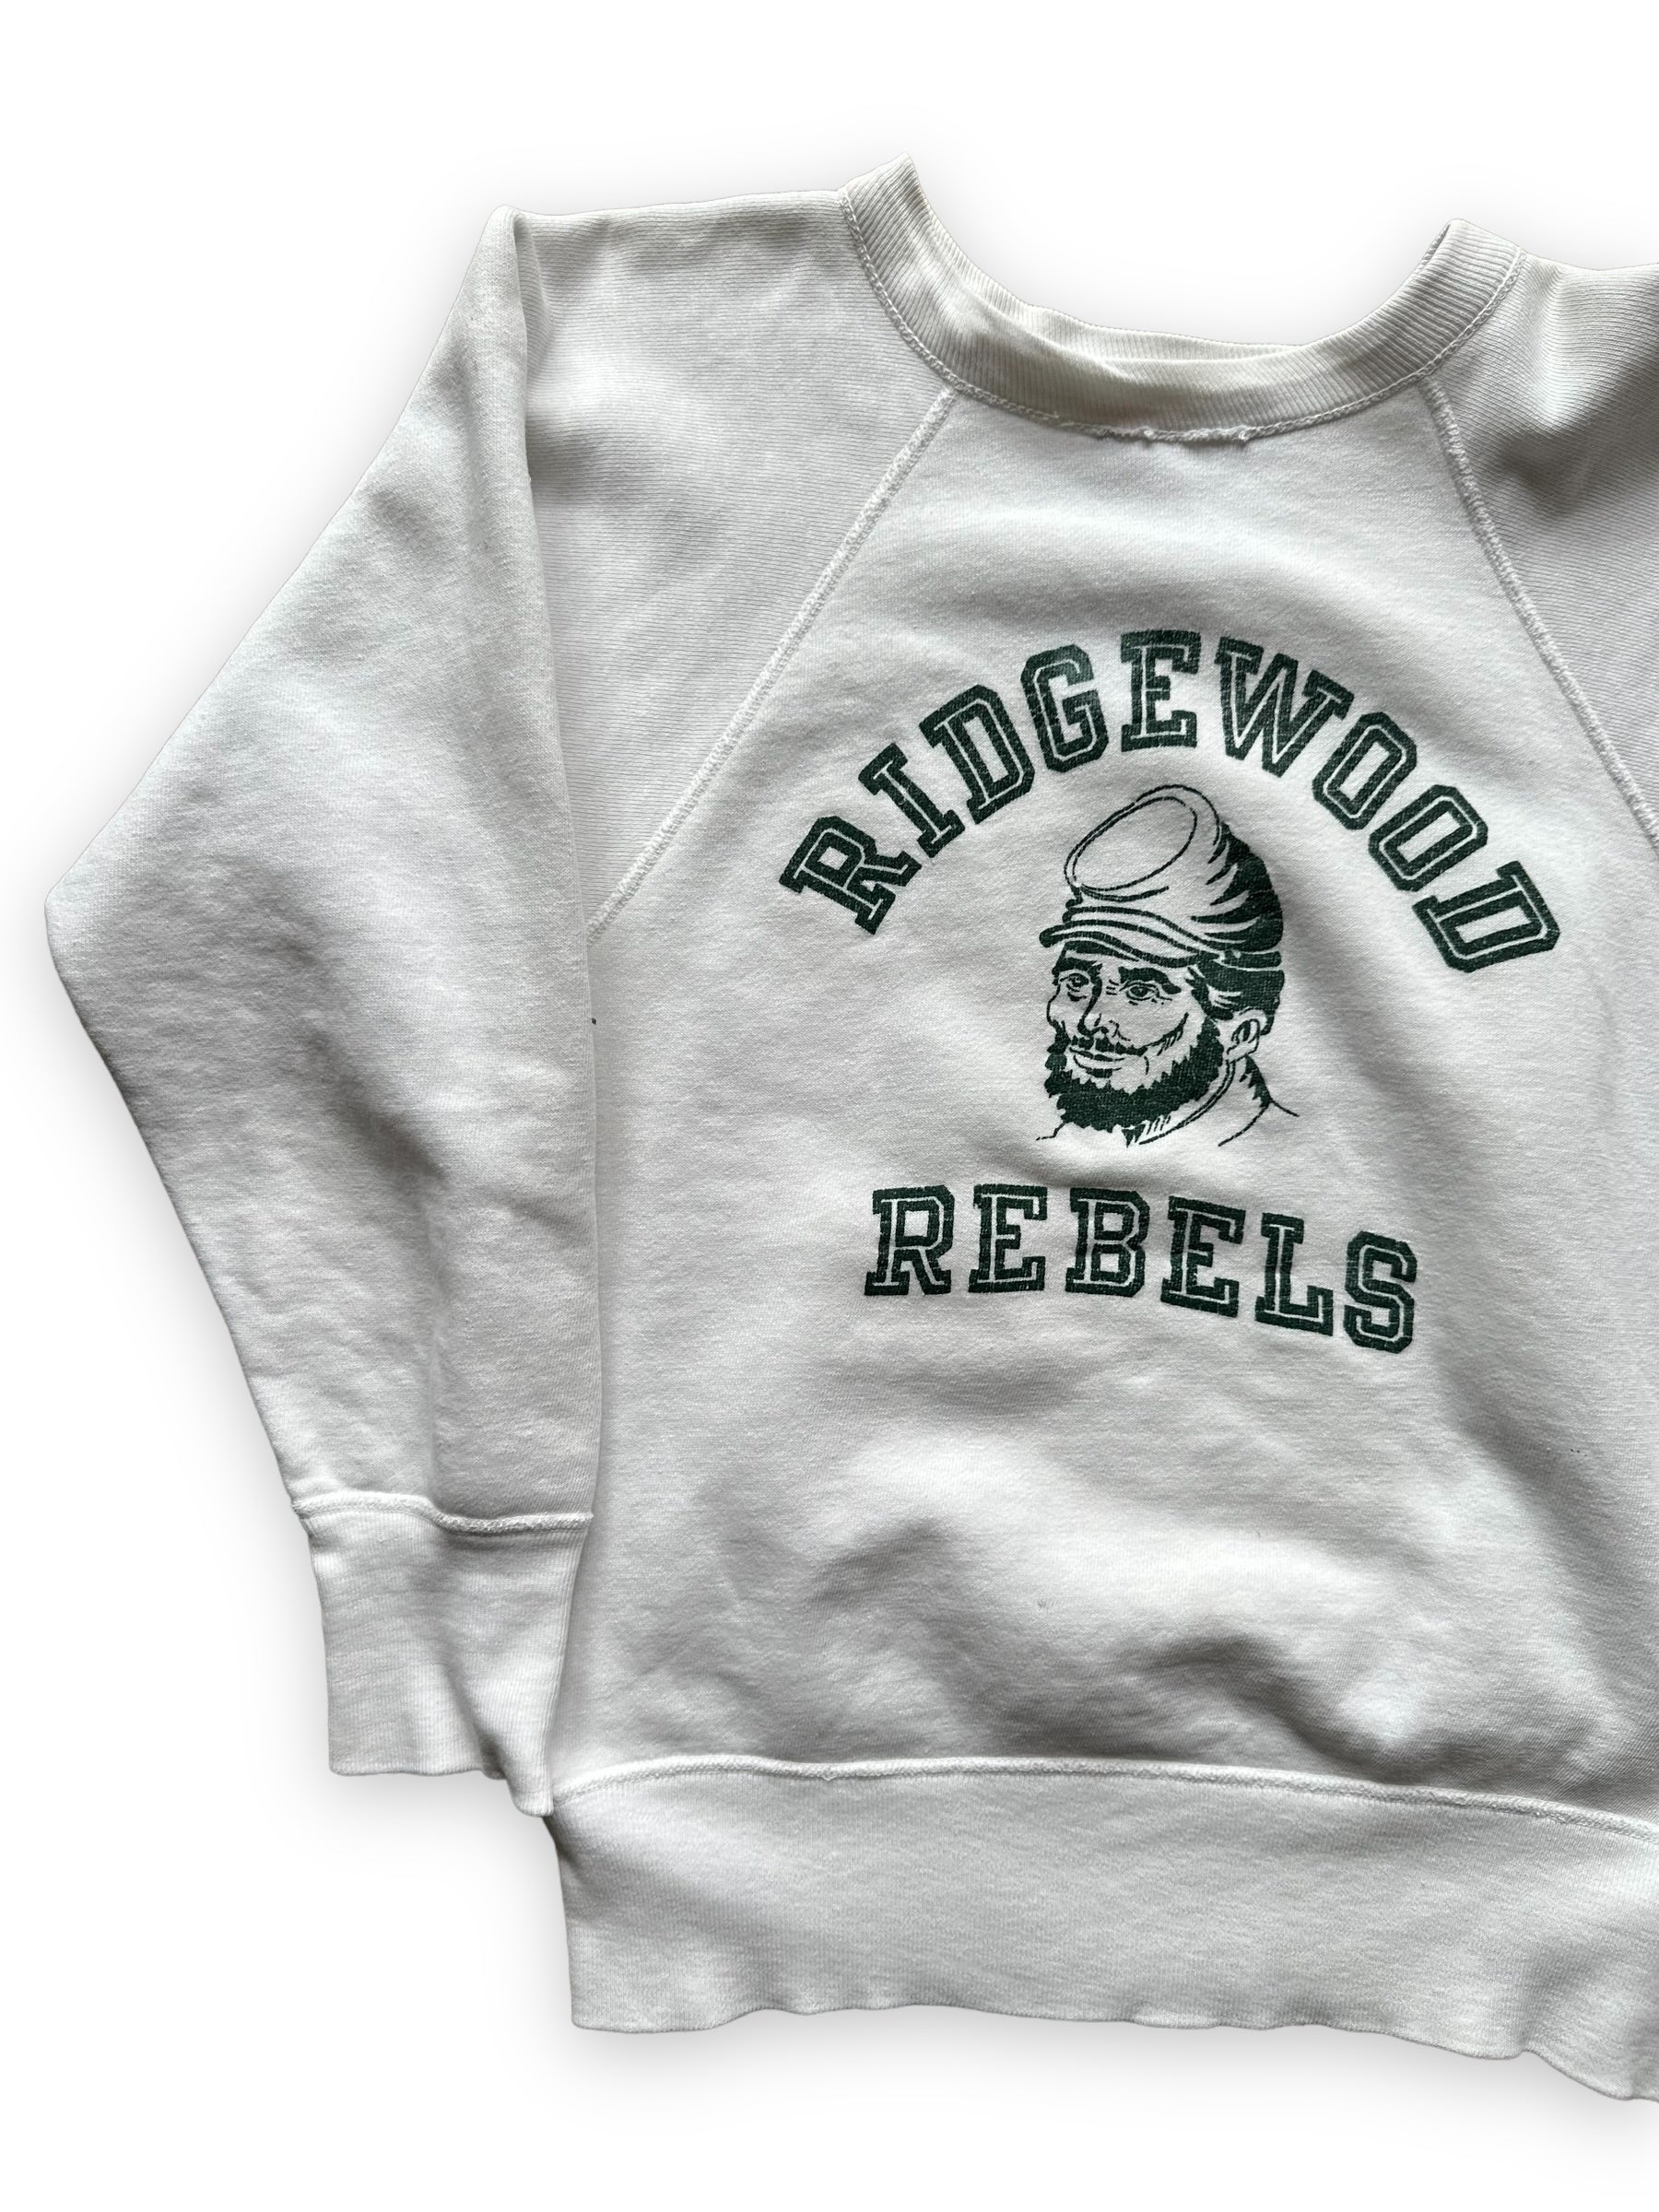 Vintage Champion Running Man Ridgewood Rebels Crewneck Sweatshirt | Vi –  The Barn Owl Vintage Goods